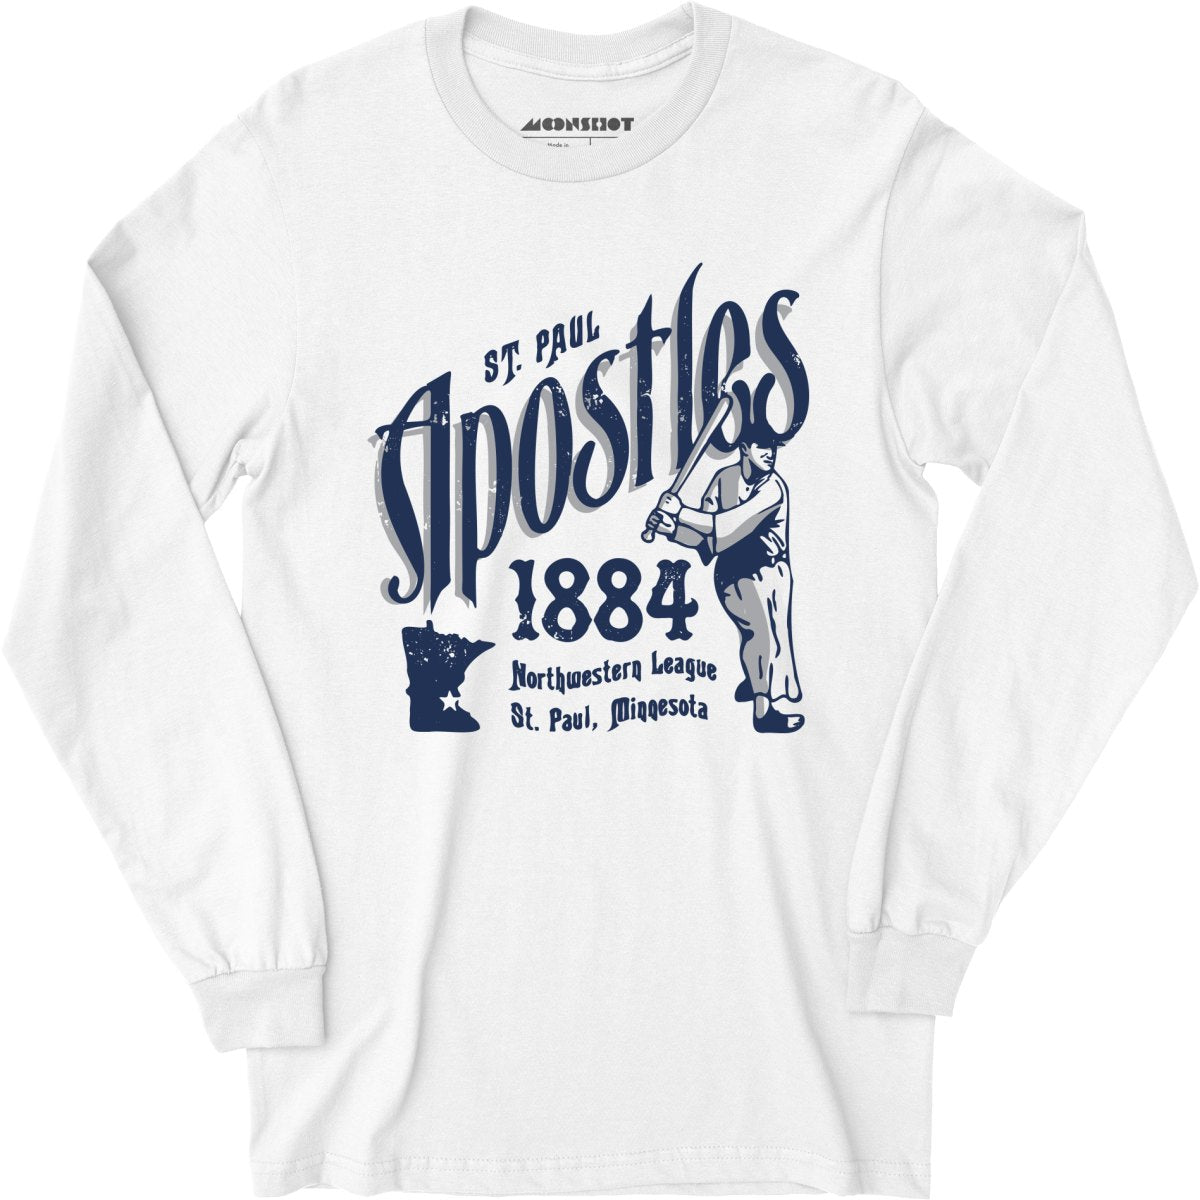 Saint Paul Apostles - Minnesota - Vintage Defunct Baseball Teams - Long Sleeve T-Shirt